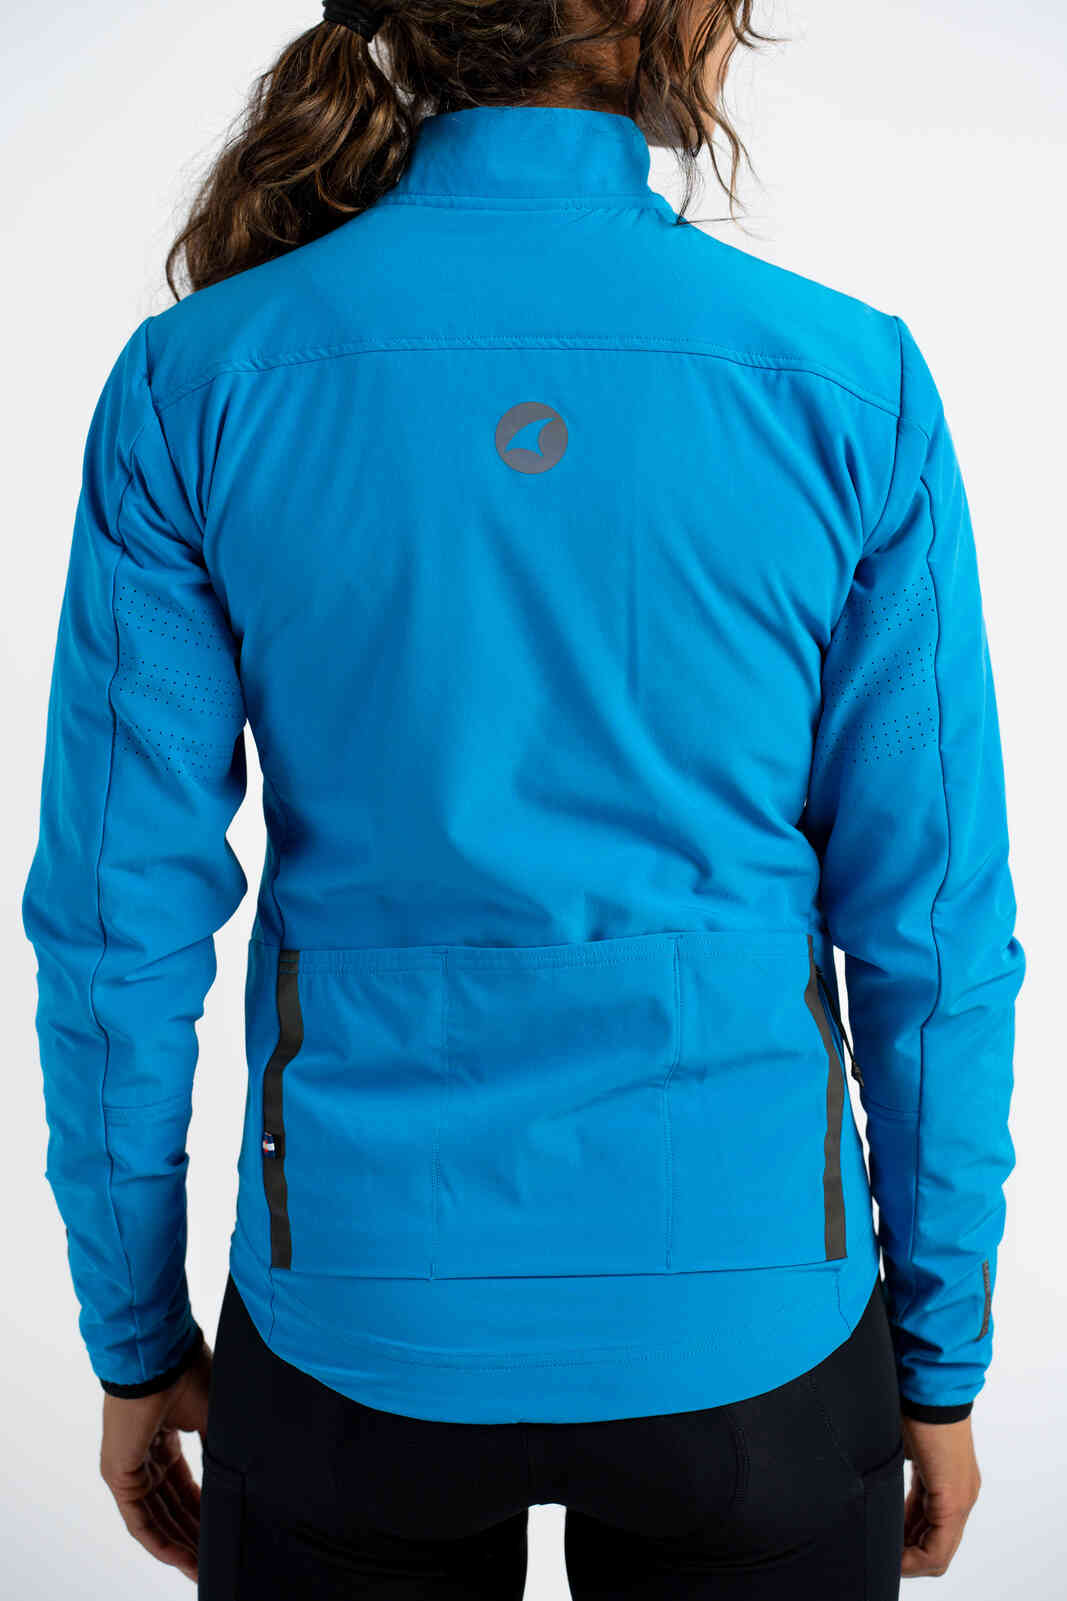 Women's Blue Winter Cycling Jacket - Back View